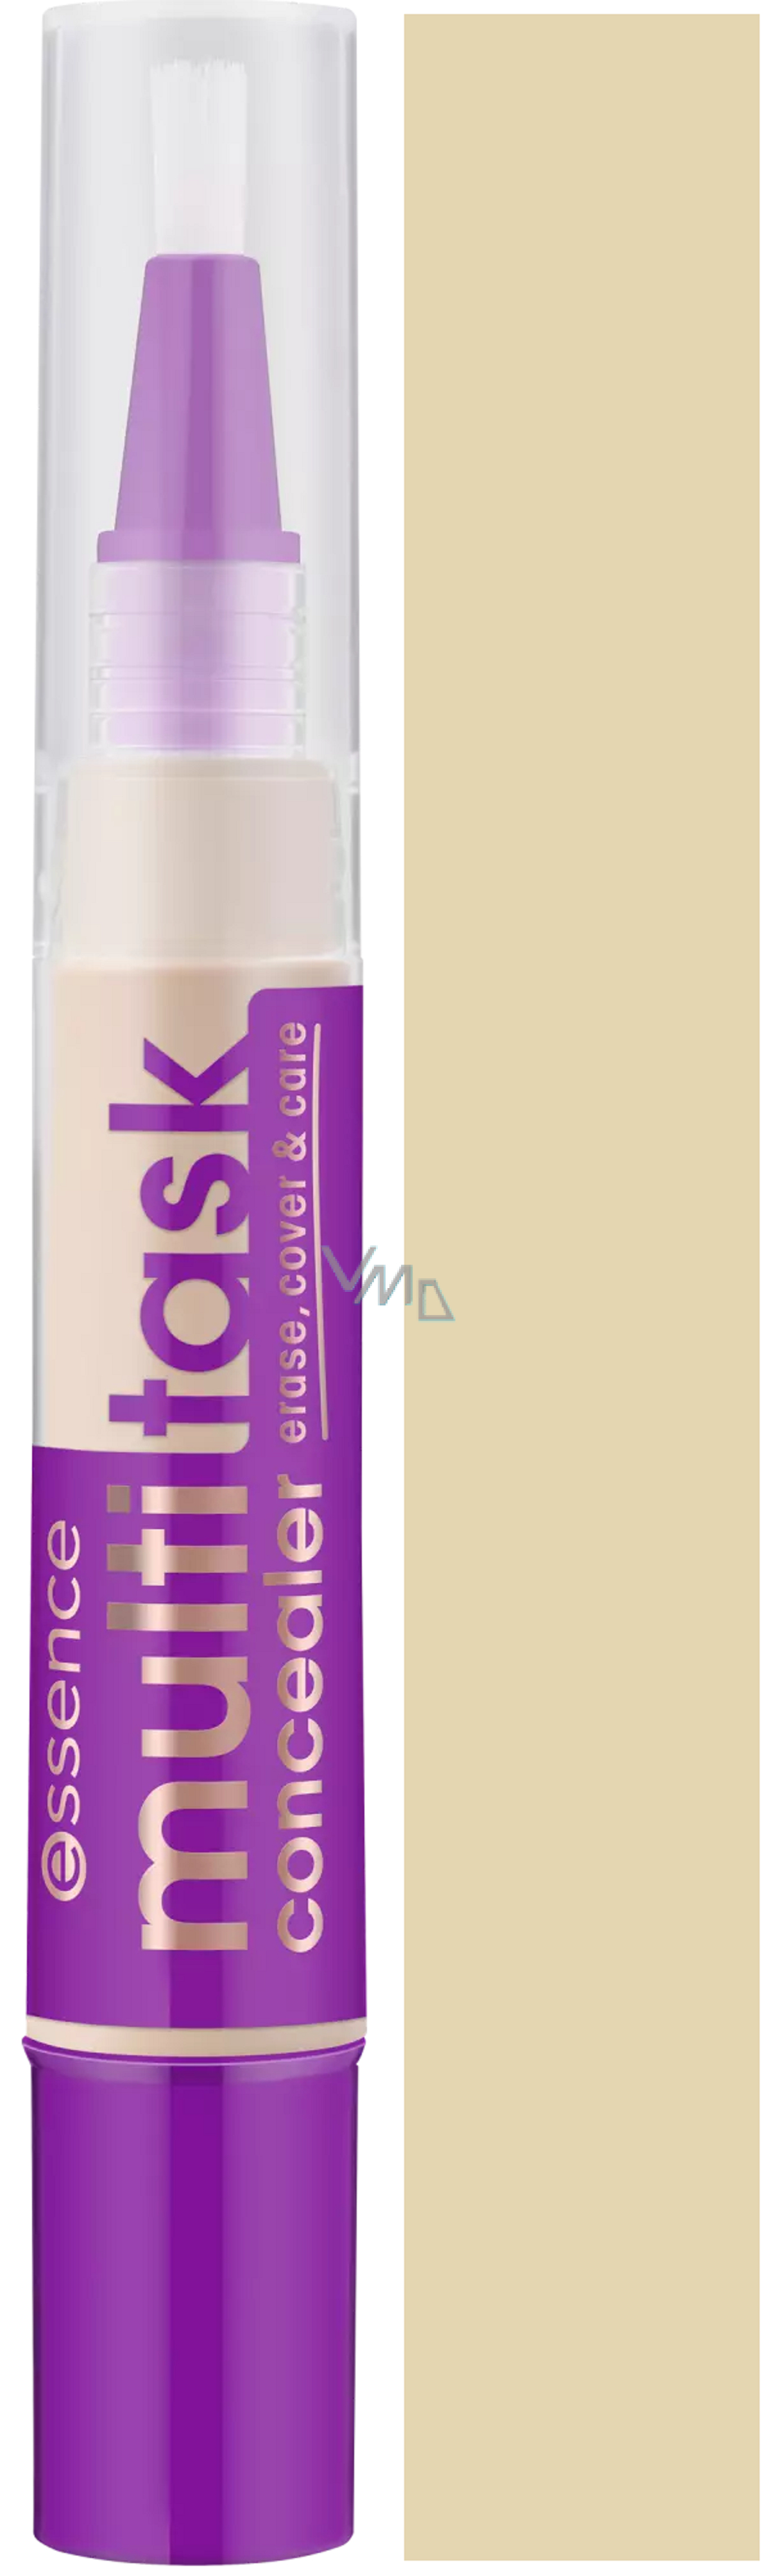 Essence Multitask Liquid parfumerie drogerie VMD - - Natural 3 Concealer ml 15 Nude